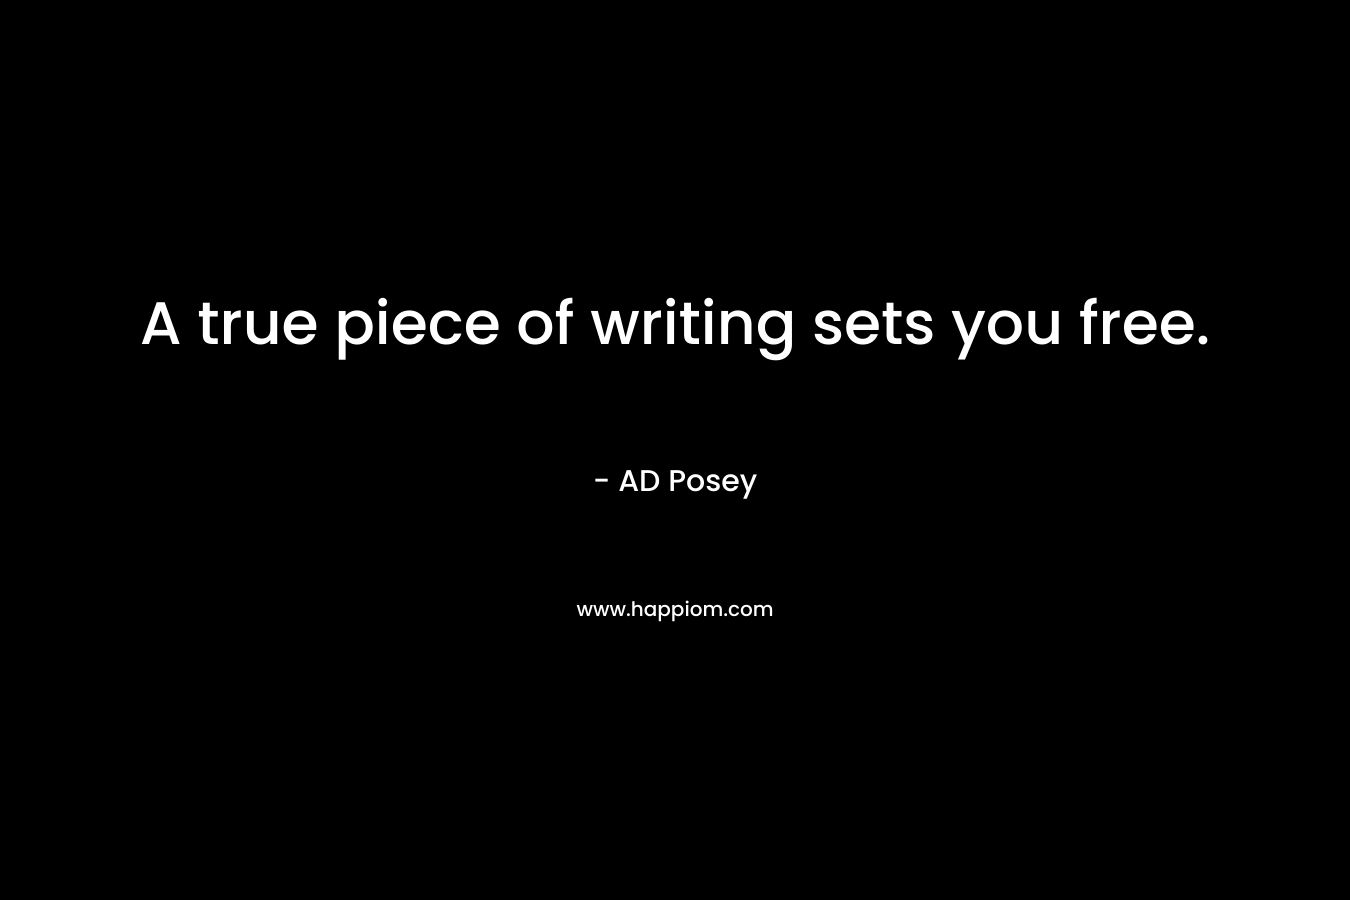 A true piece of writing sets you free.